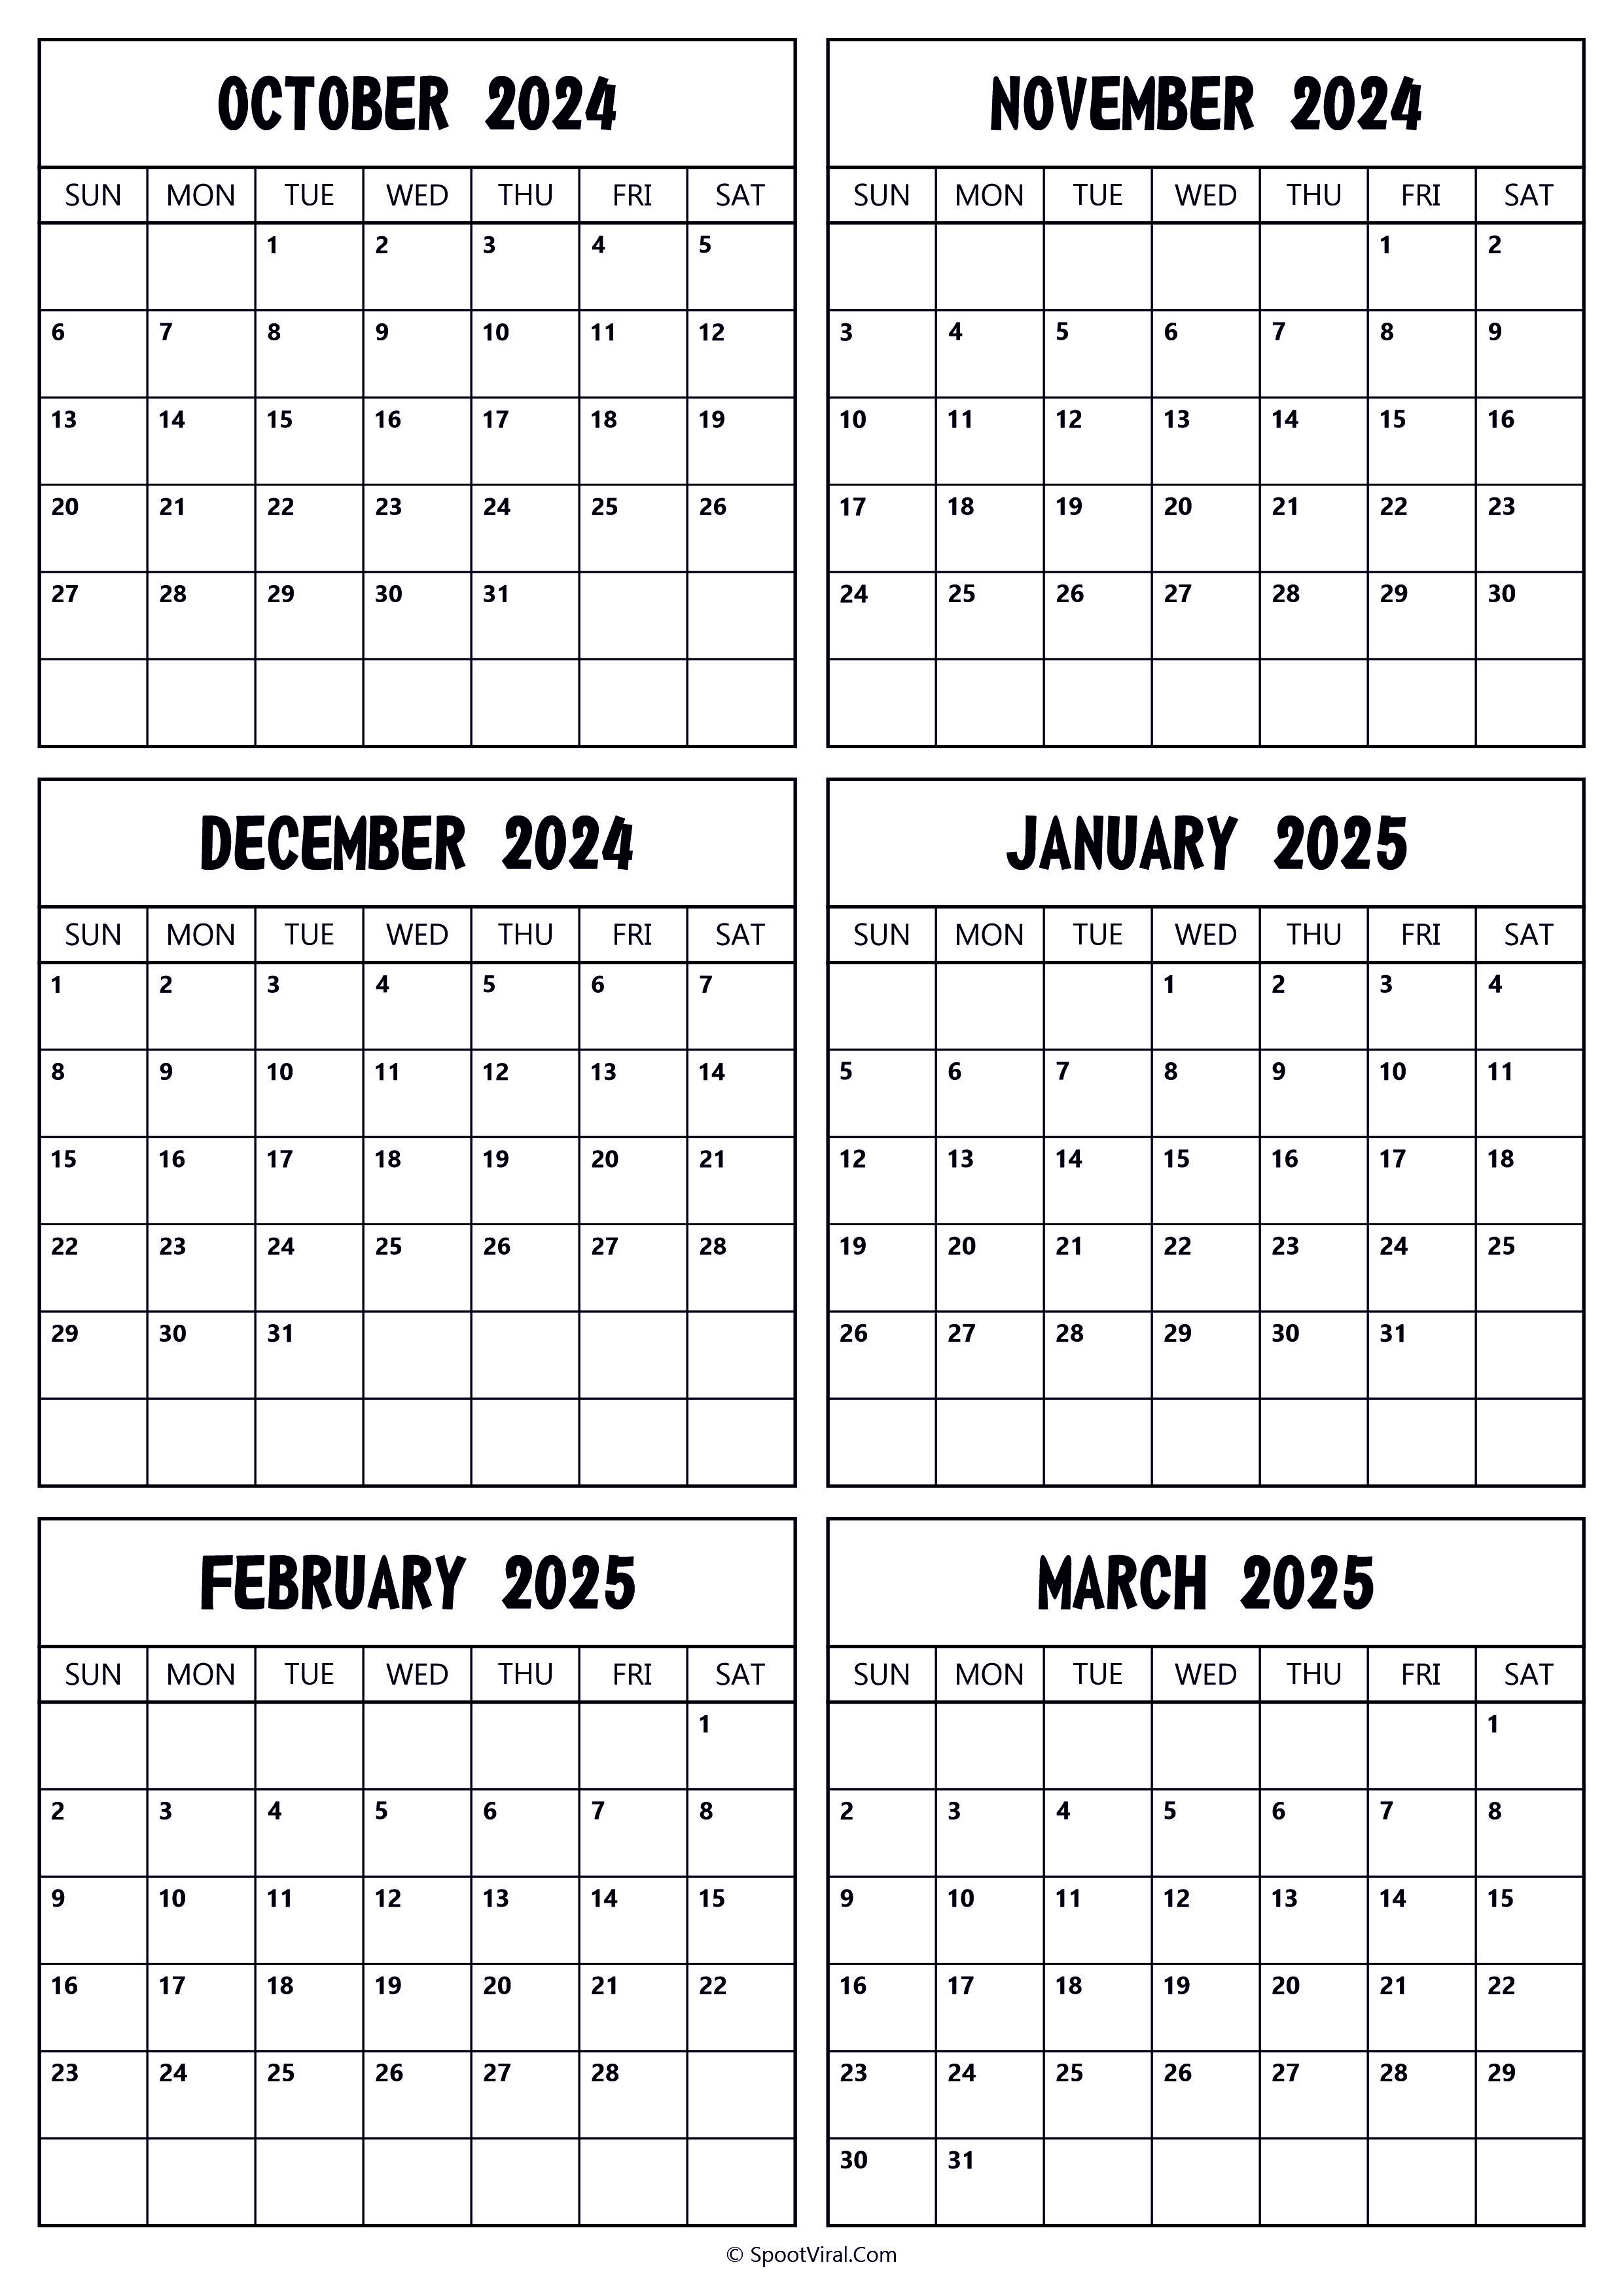 2024 October to 2025 March Calendar